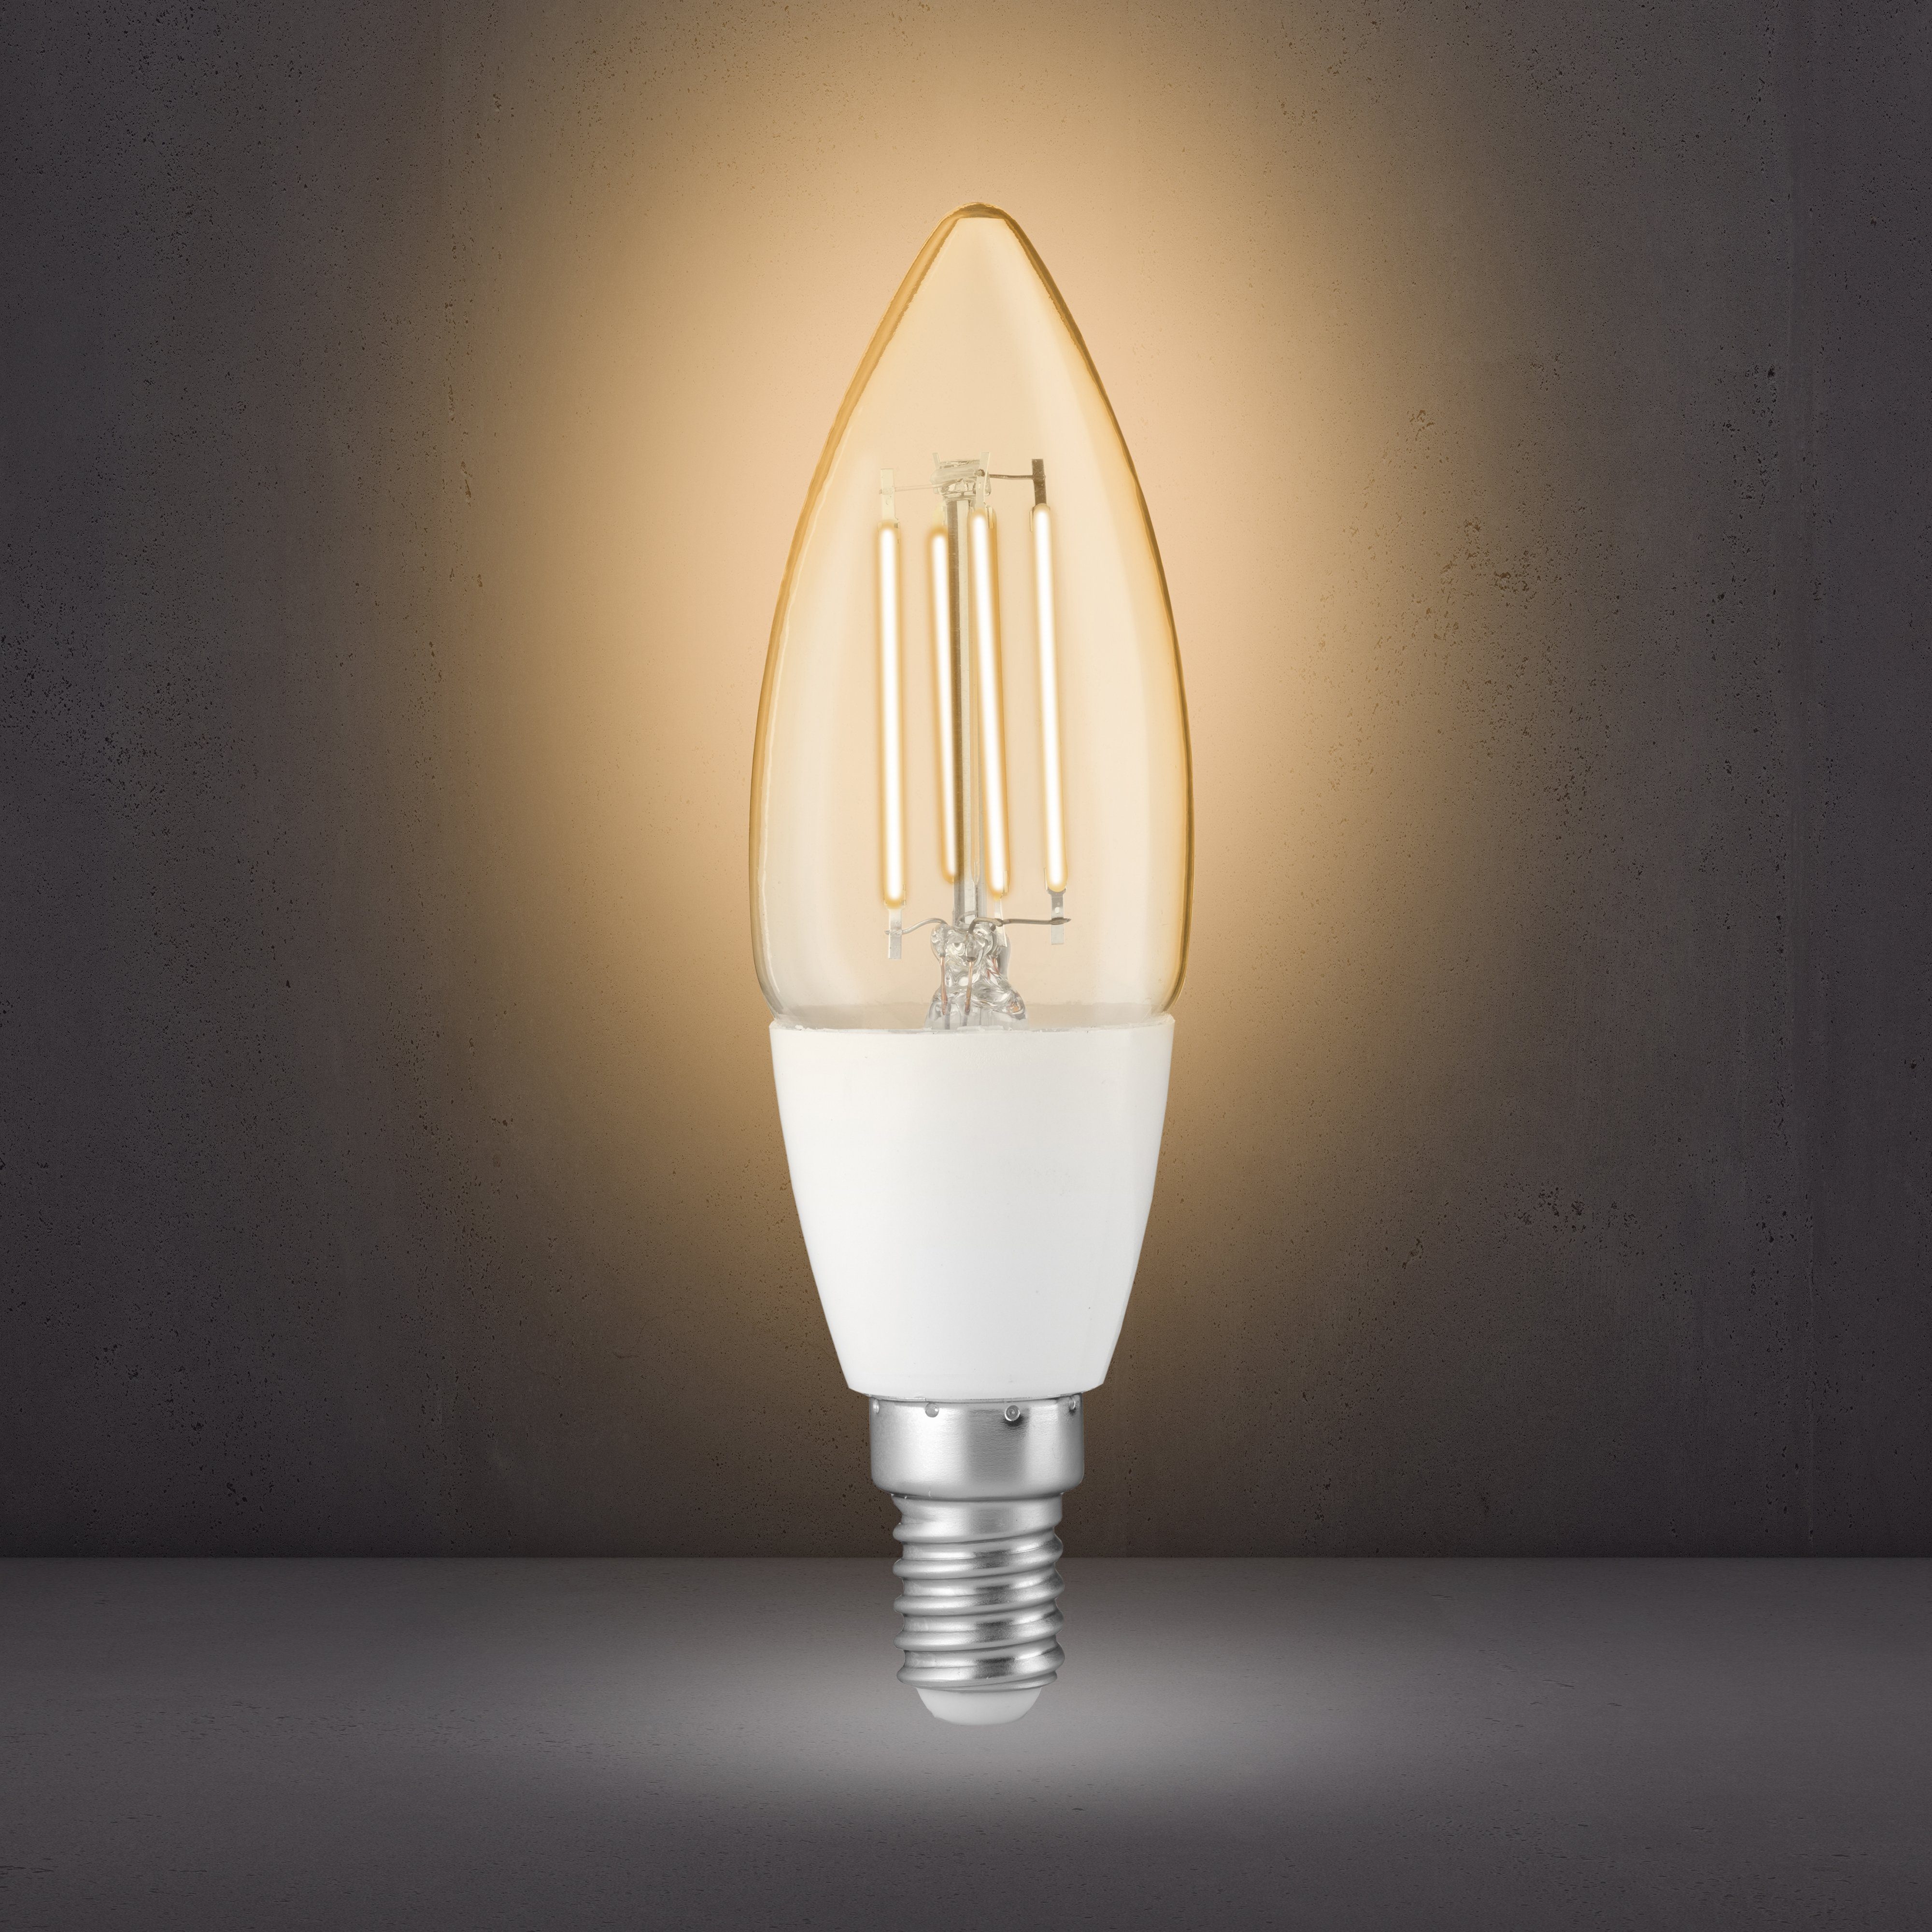 SMARTLIGHT130 Lampe Smarte Alecto